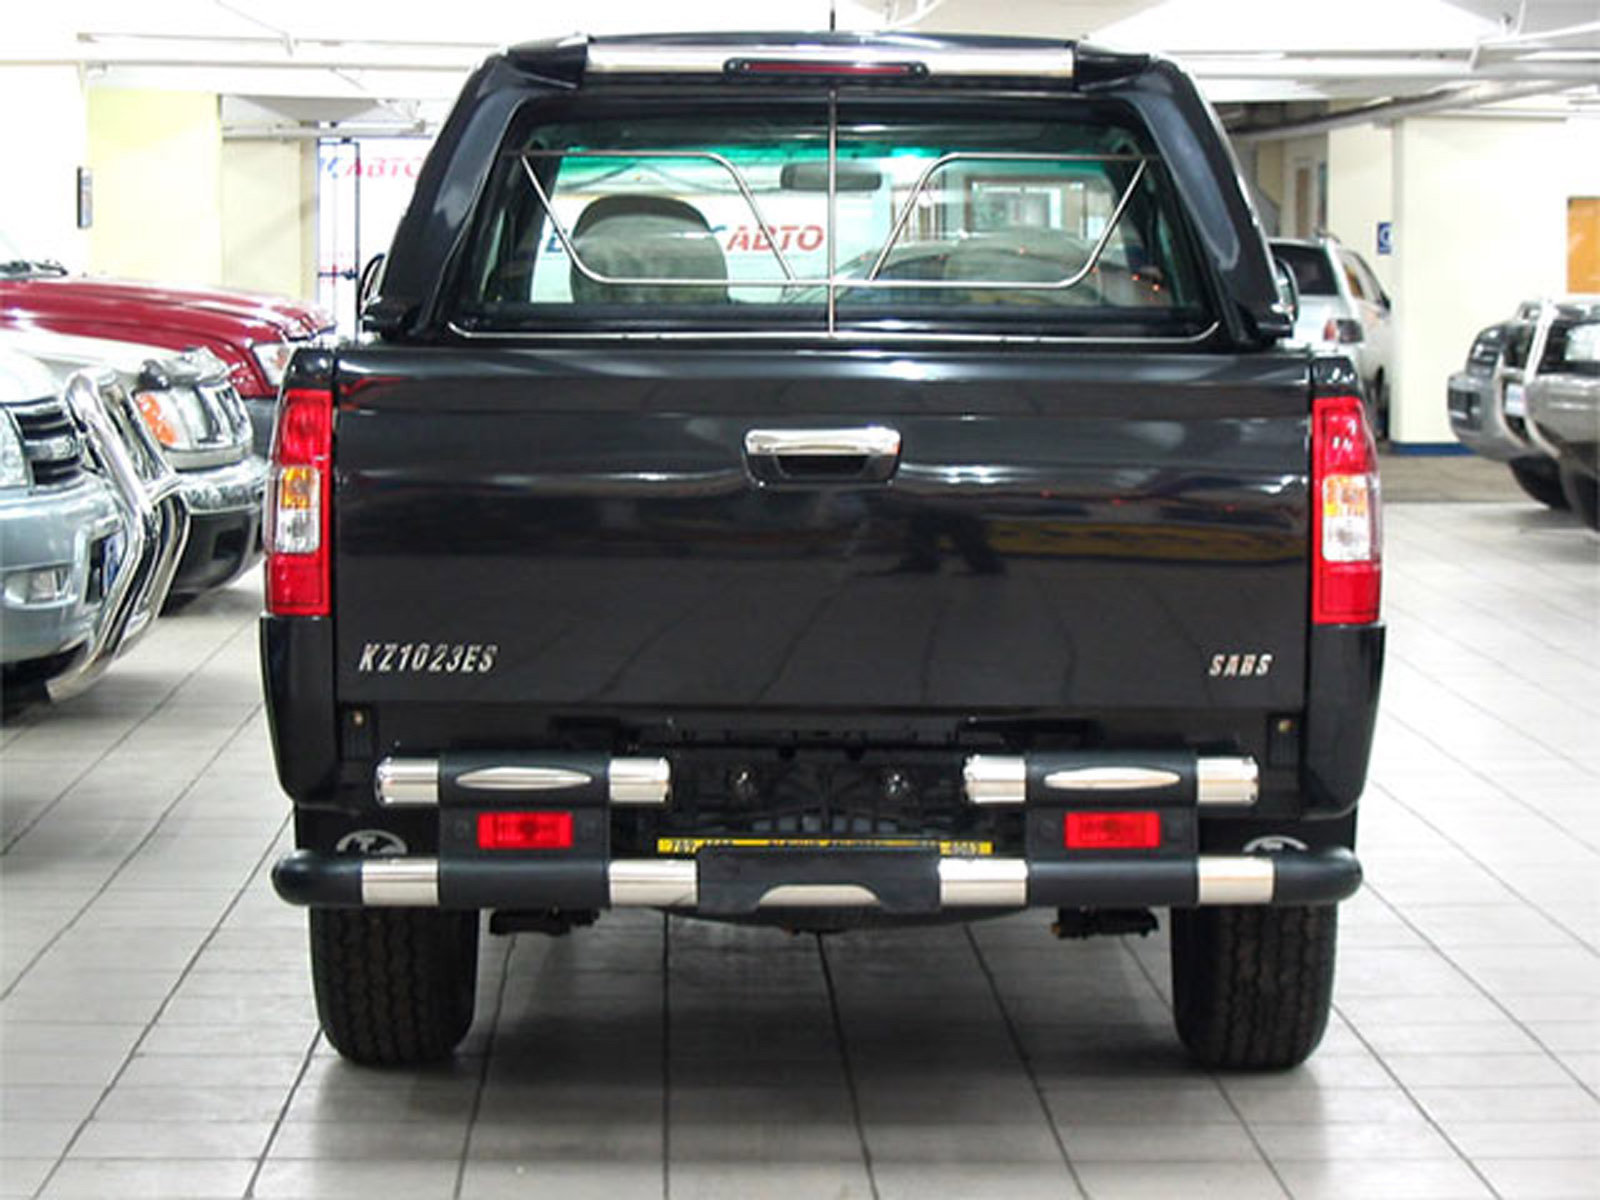 Tianma Century 2005 - 2008 Pickup #7